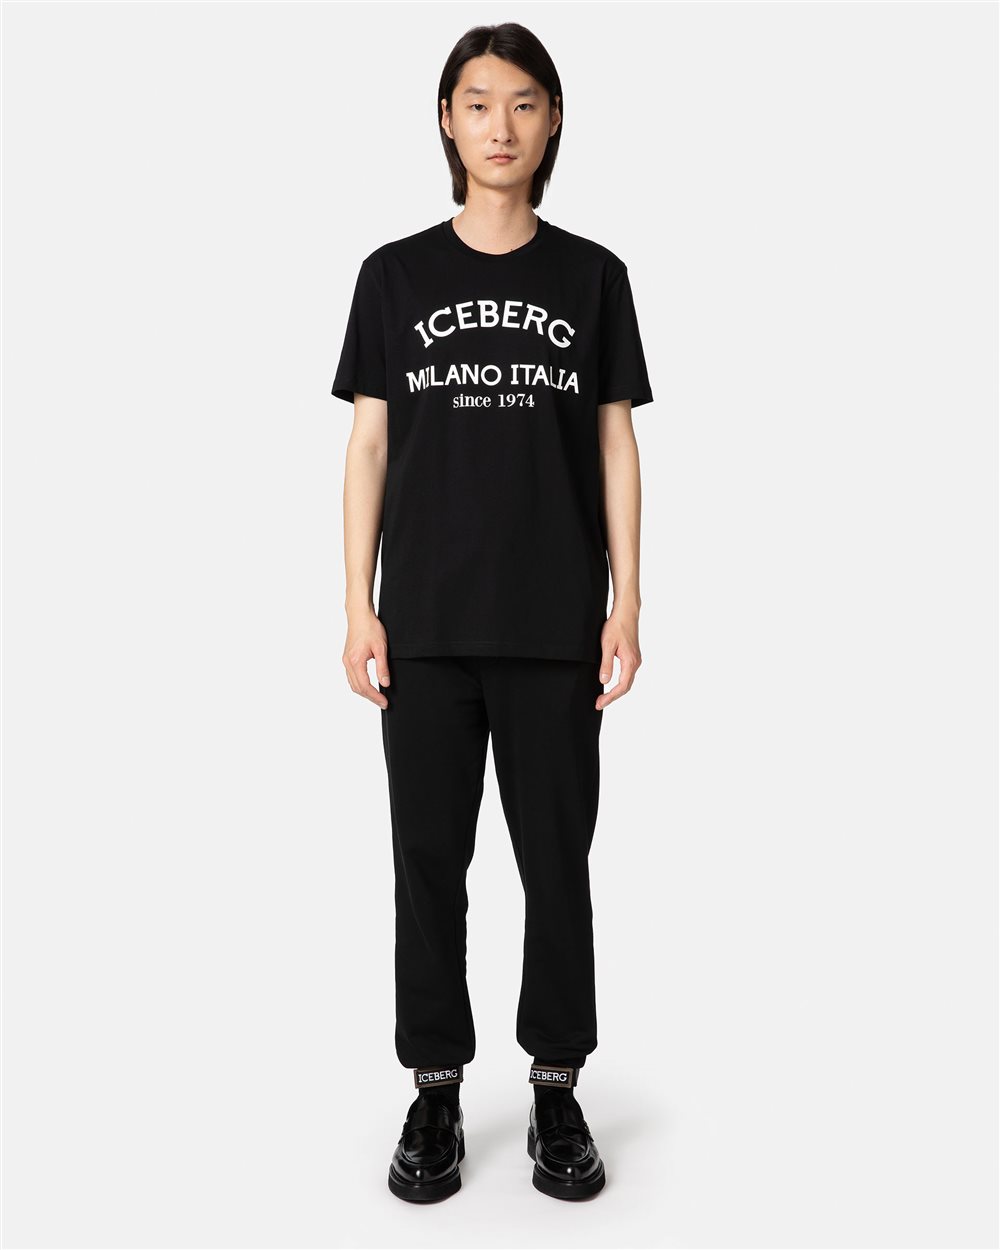 Black T-shirt with institutional logo - Iceberg - Official Website